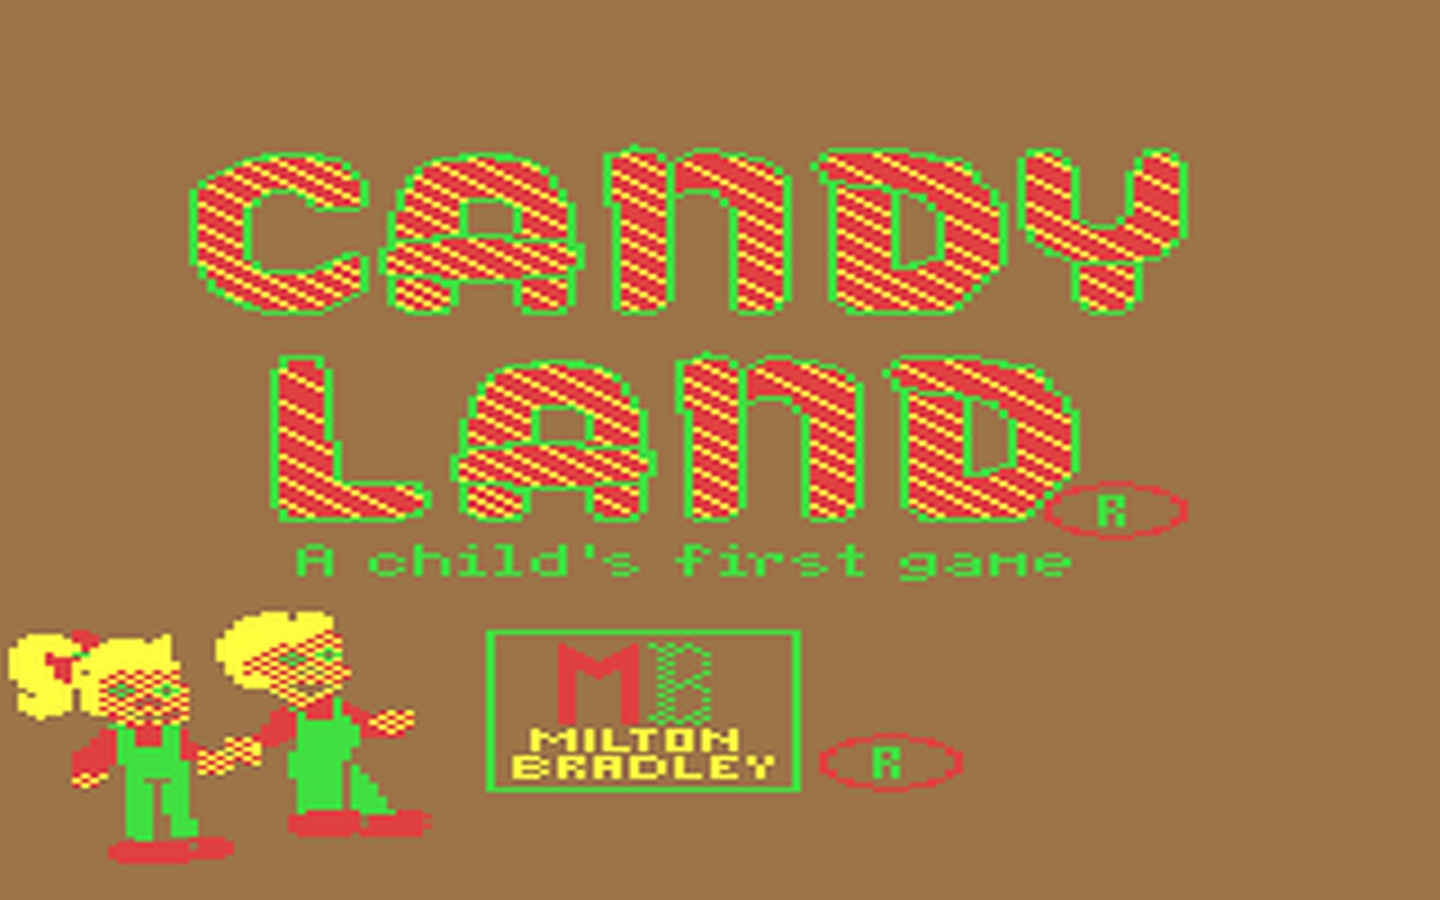 C64 GameBase Candy_Land_-_A_Child's_First_Game GameTek 1988